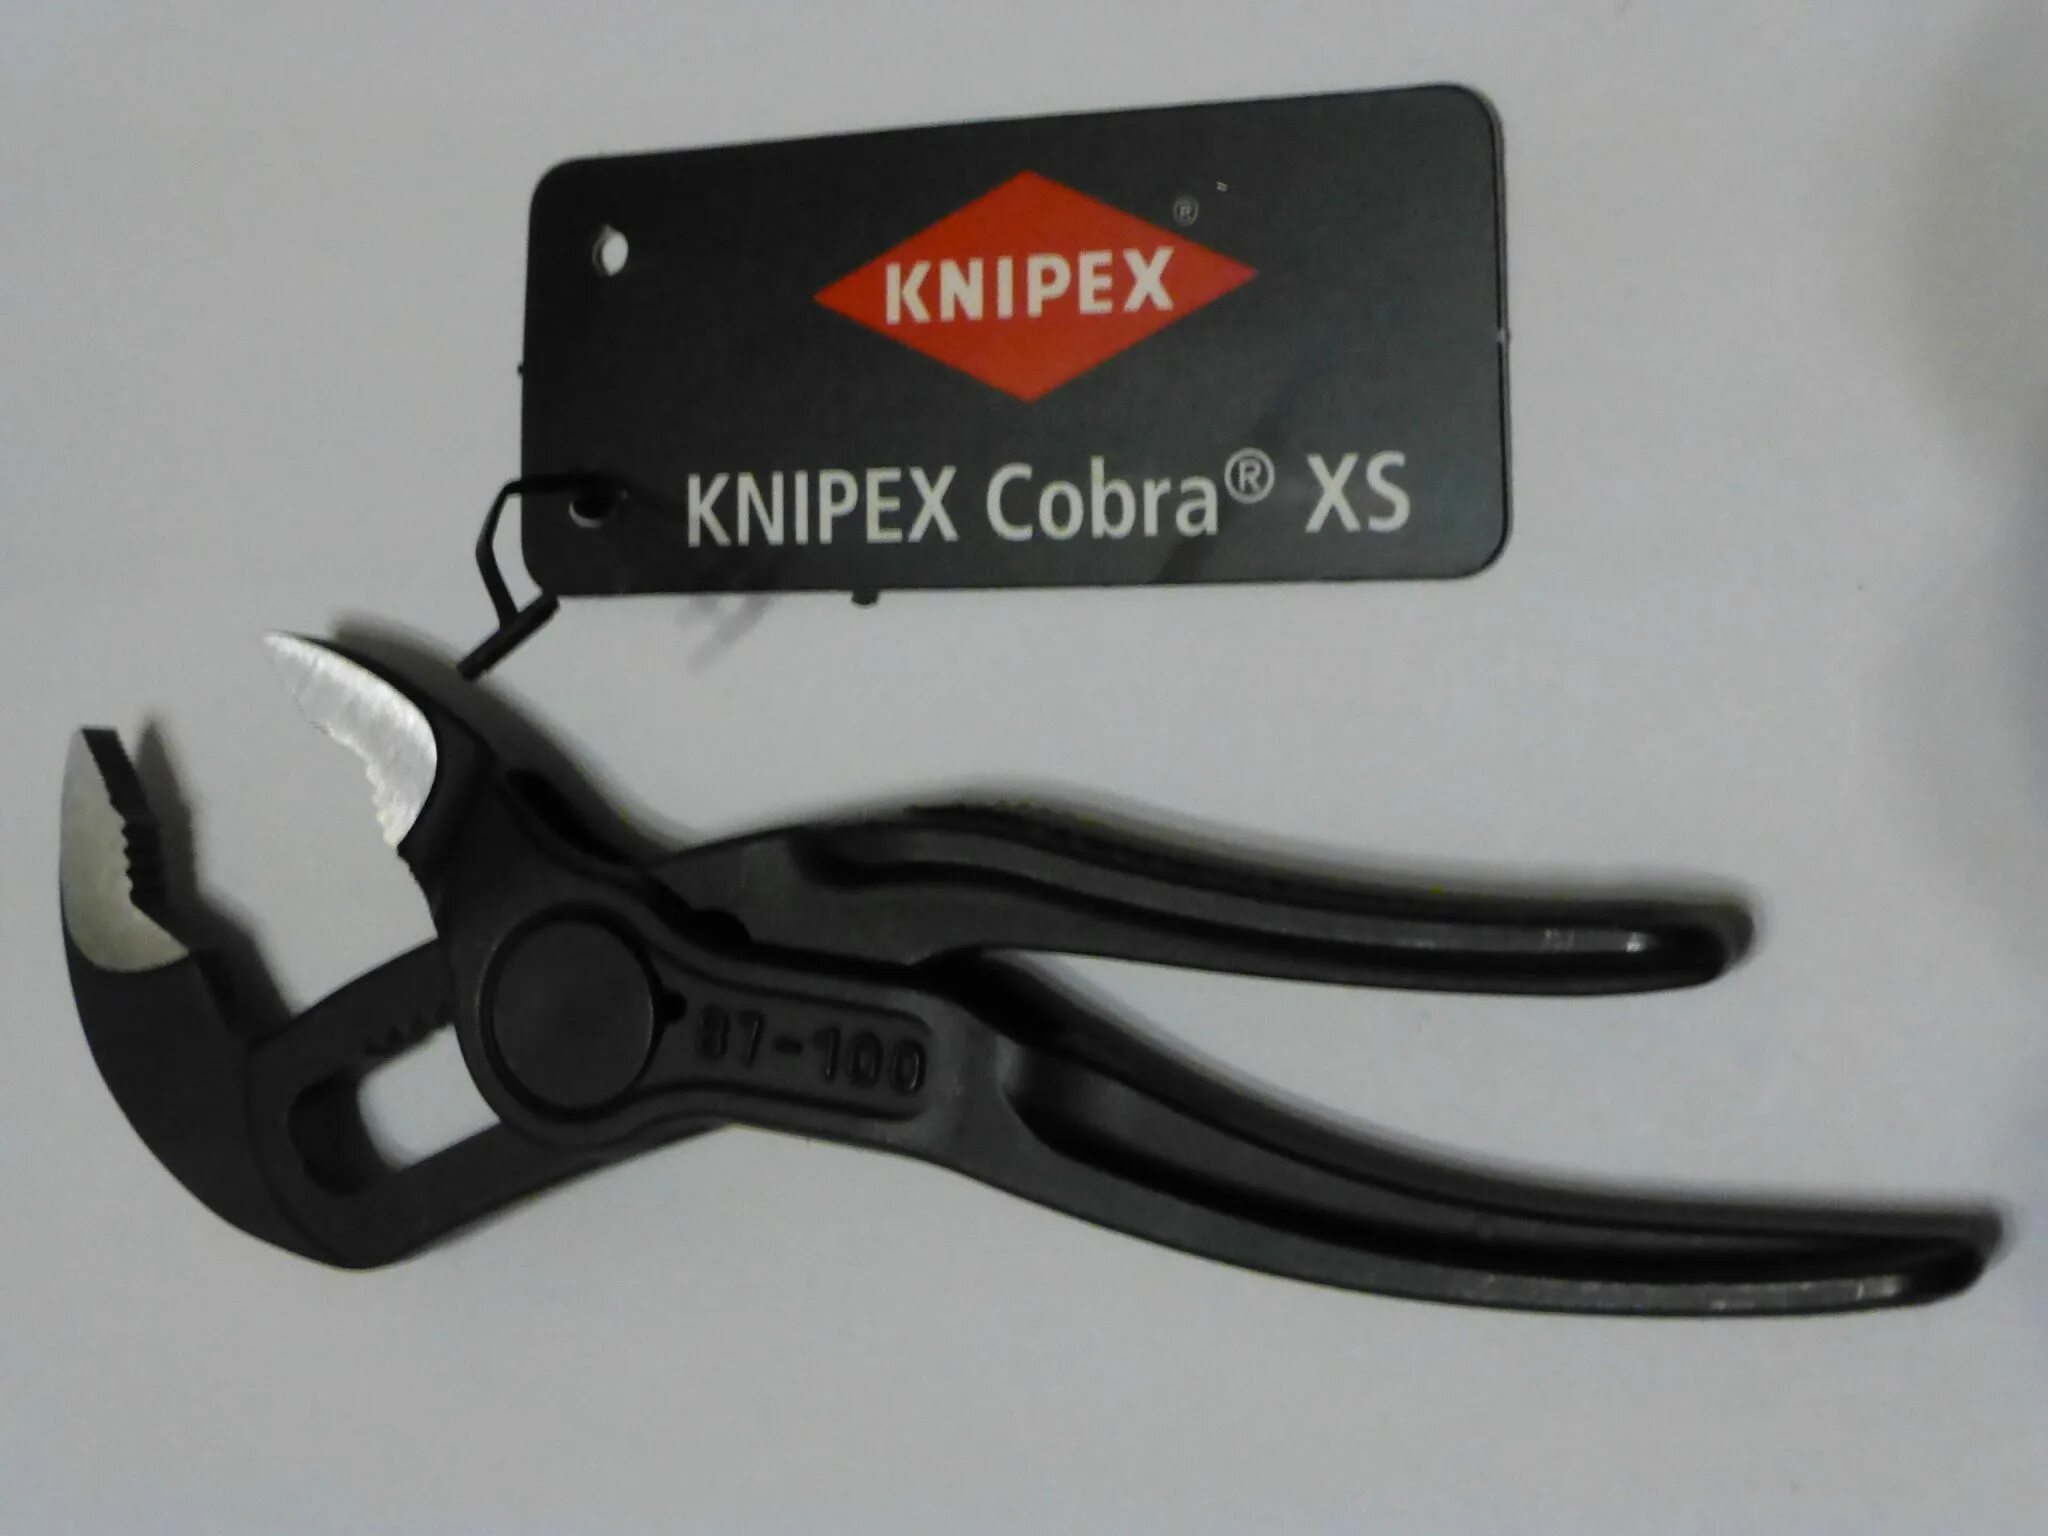 Knipex cobra 100. Клещи сантехнические Knipex KN-8700100. Клещи переставные Knipex KN-8700100 Cobra® XS, 28 мм (1"), 100 мм. Knipex Cobra XS. Knipex Cobra XS сантехнические переставные клещи с фиксатором KN-8700100.